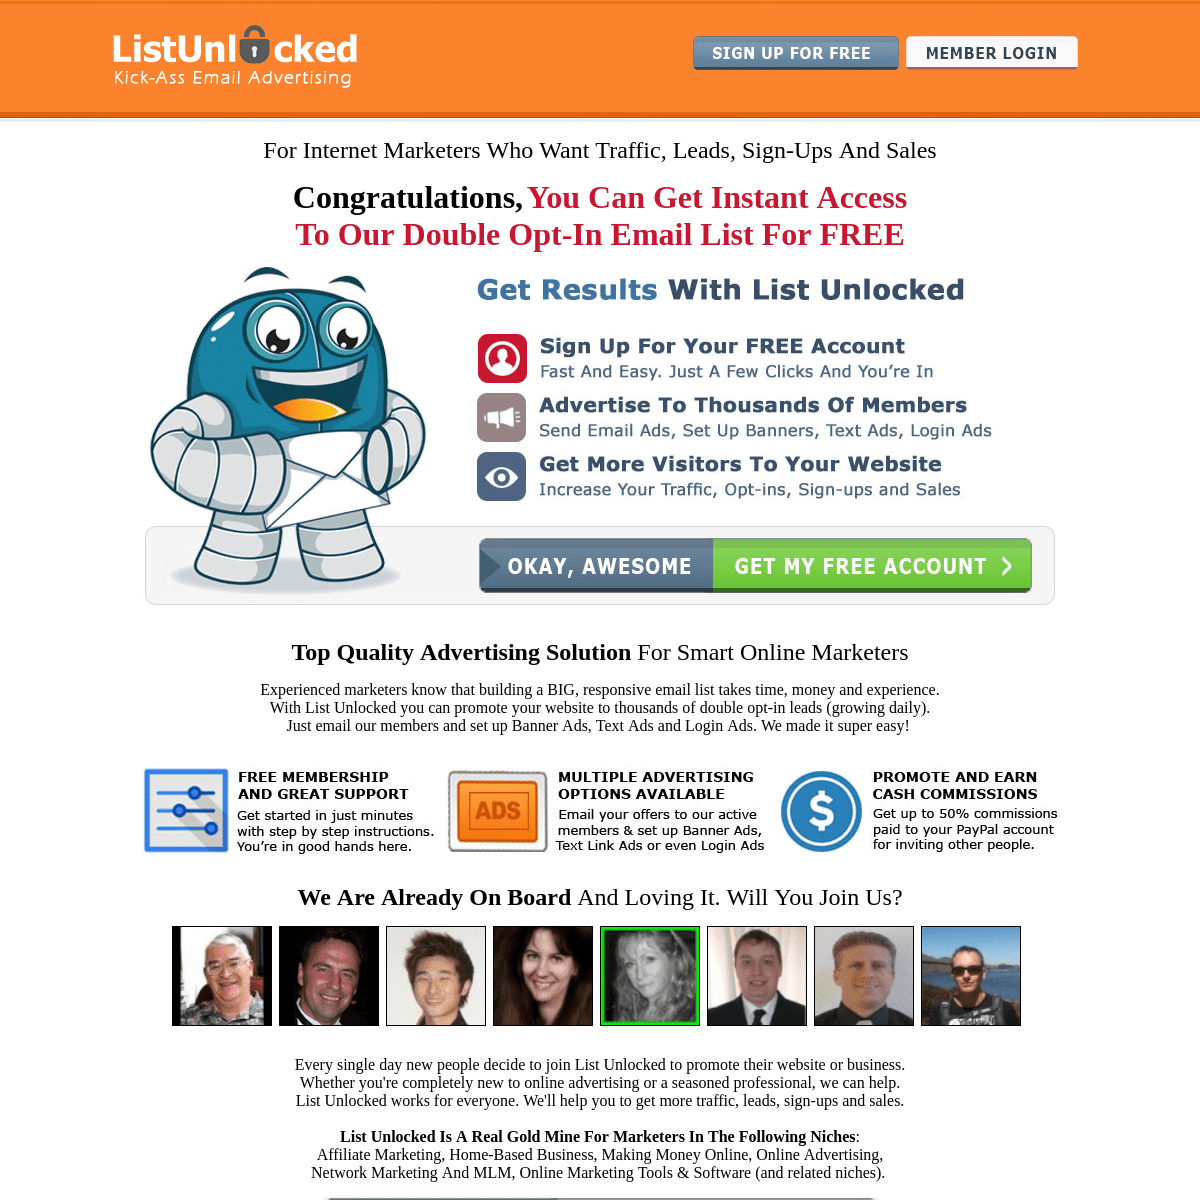 A complete backup of listunlocked.com